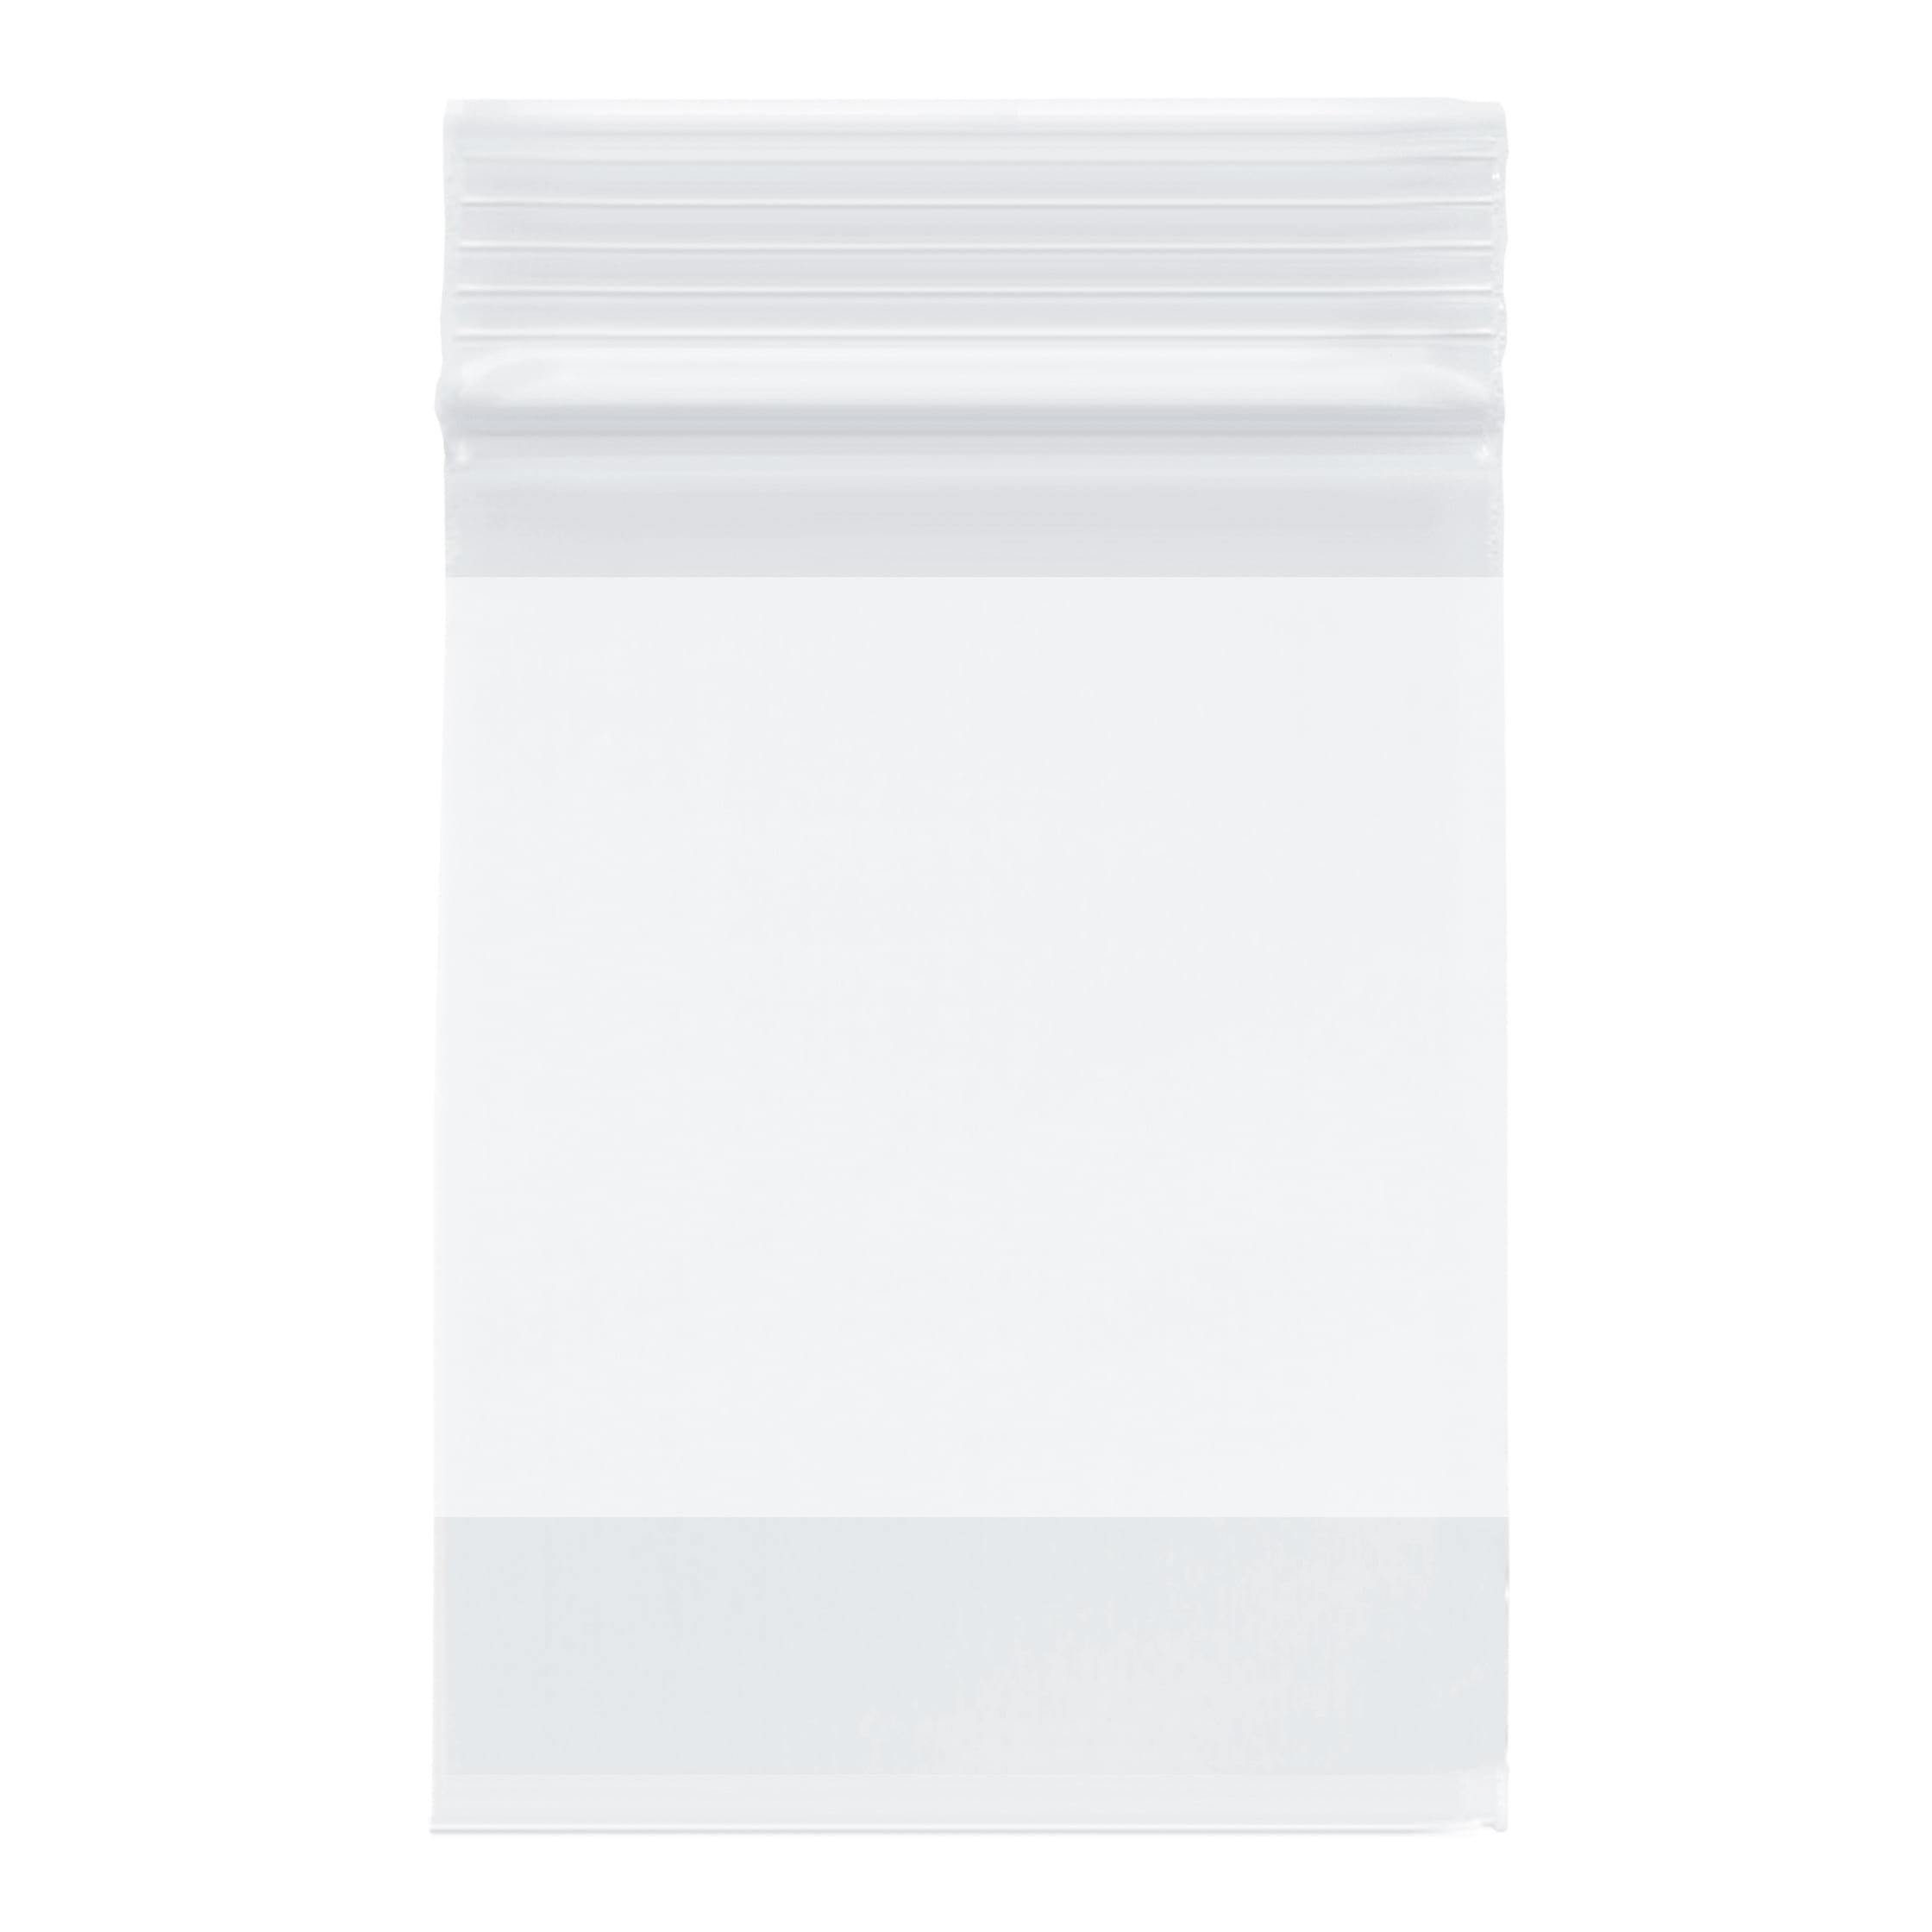 Details about   Plymor Heavy Duty Plastic Reclosable Zipper Bags W/White Block 5" X 8" 4 Mil 